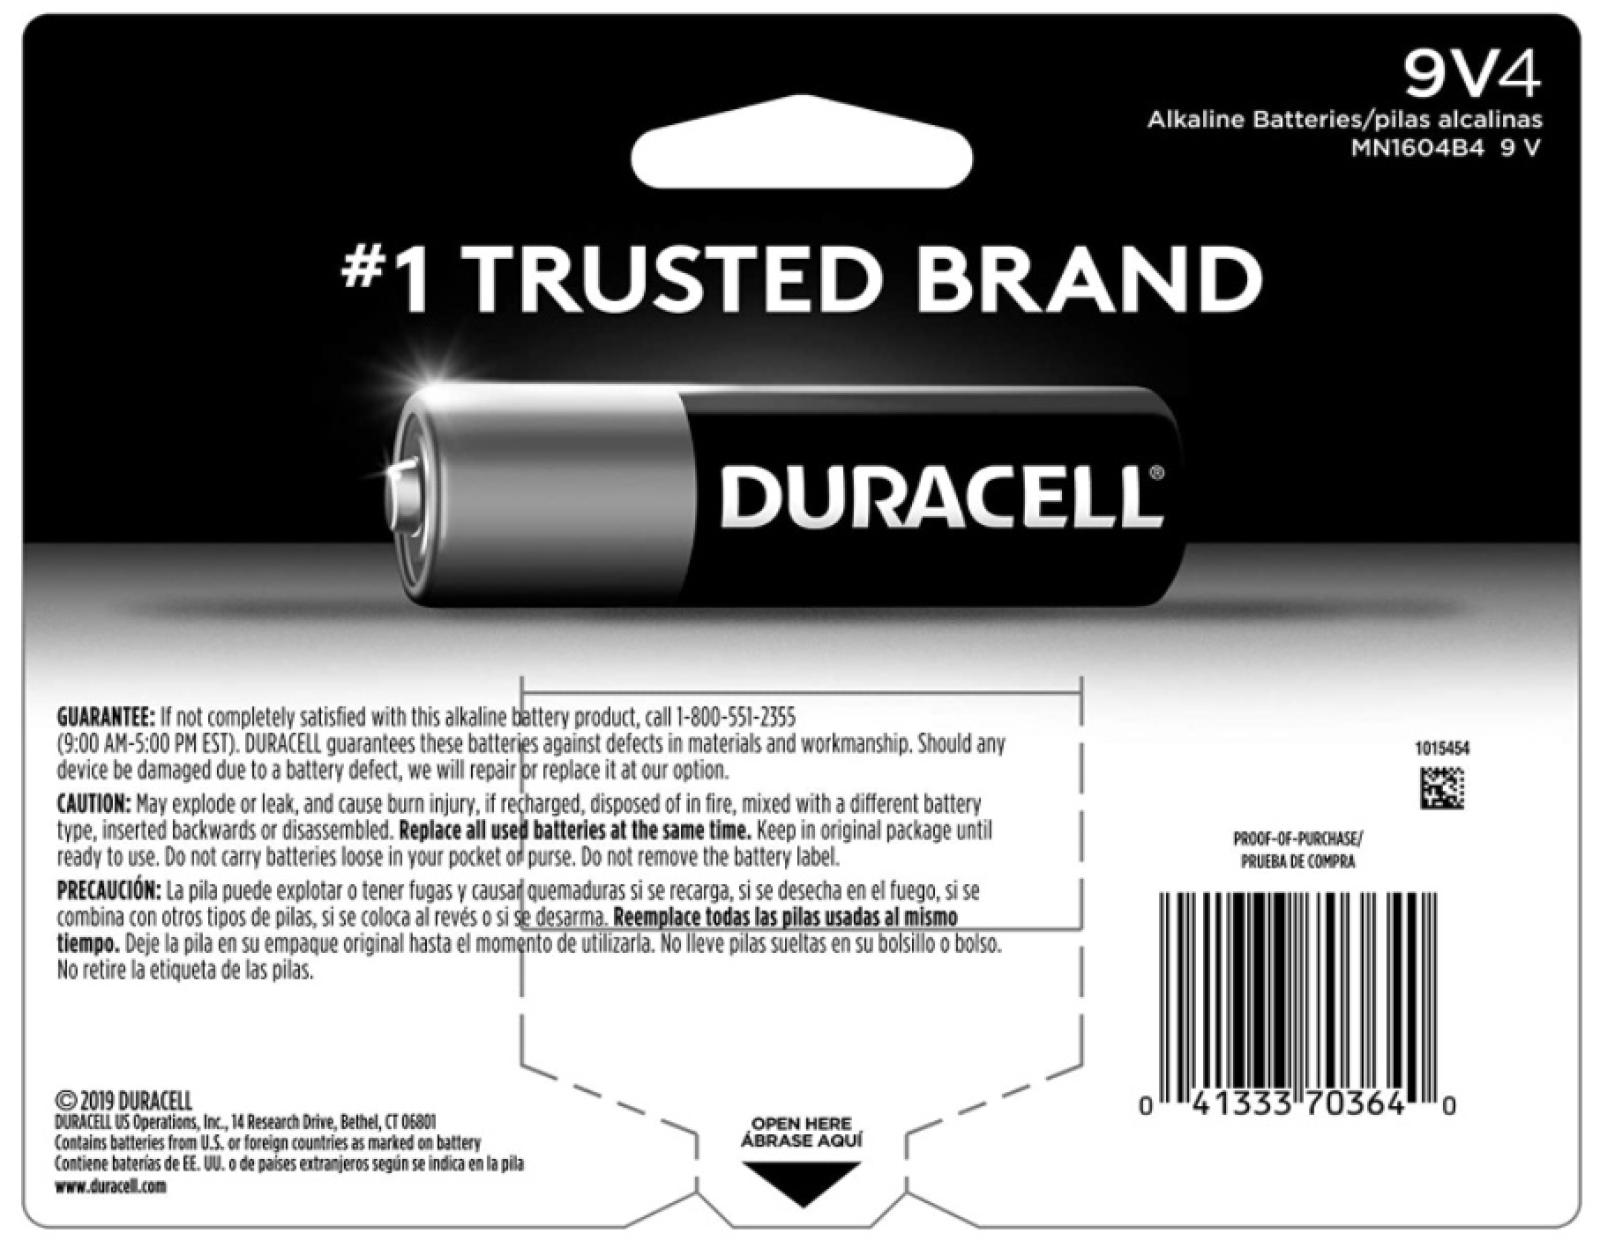 Duracell CopperTop 9V Alkaline Batteries - 2 count